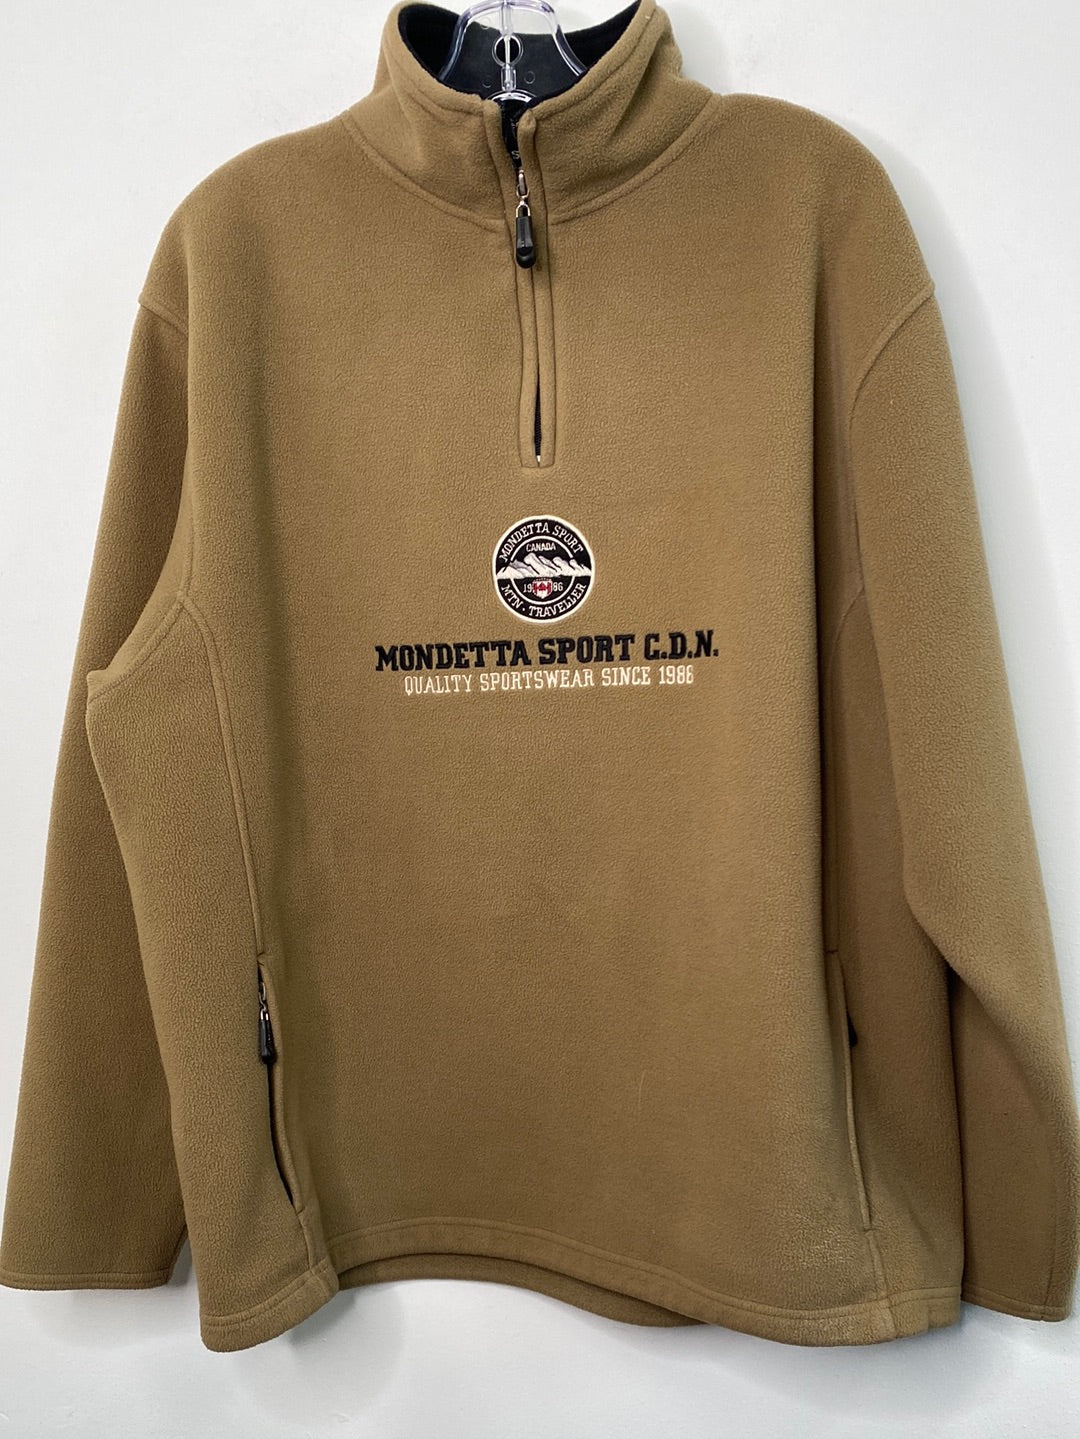 Mondetta activewear/ CASUAL jacket